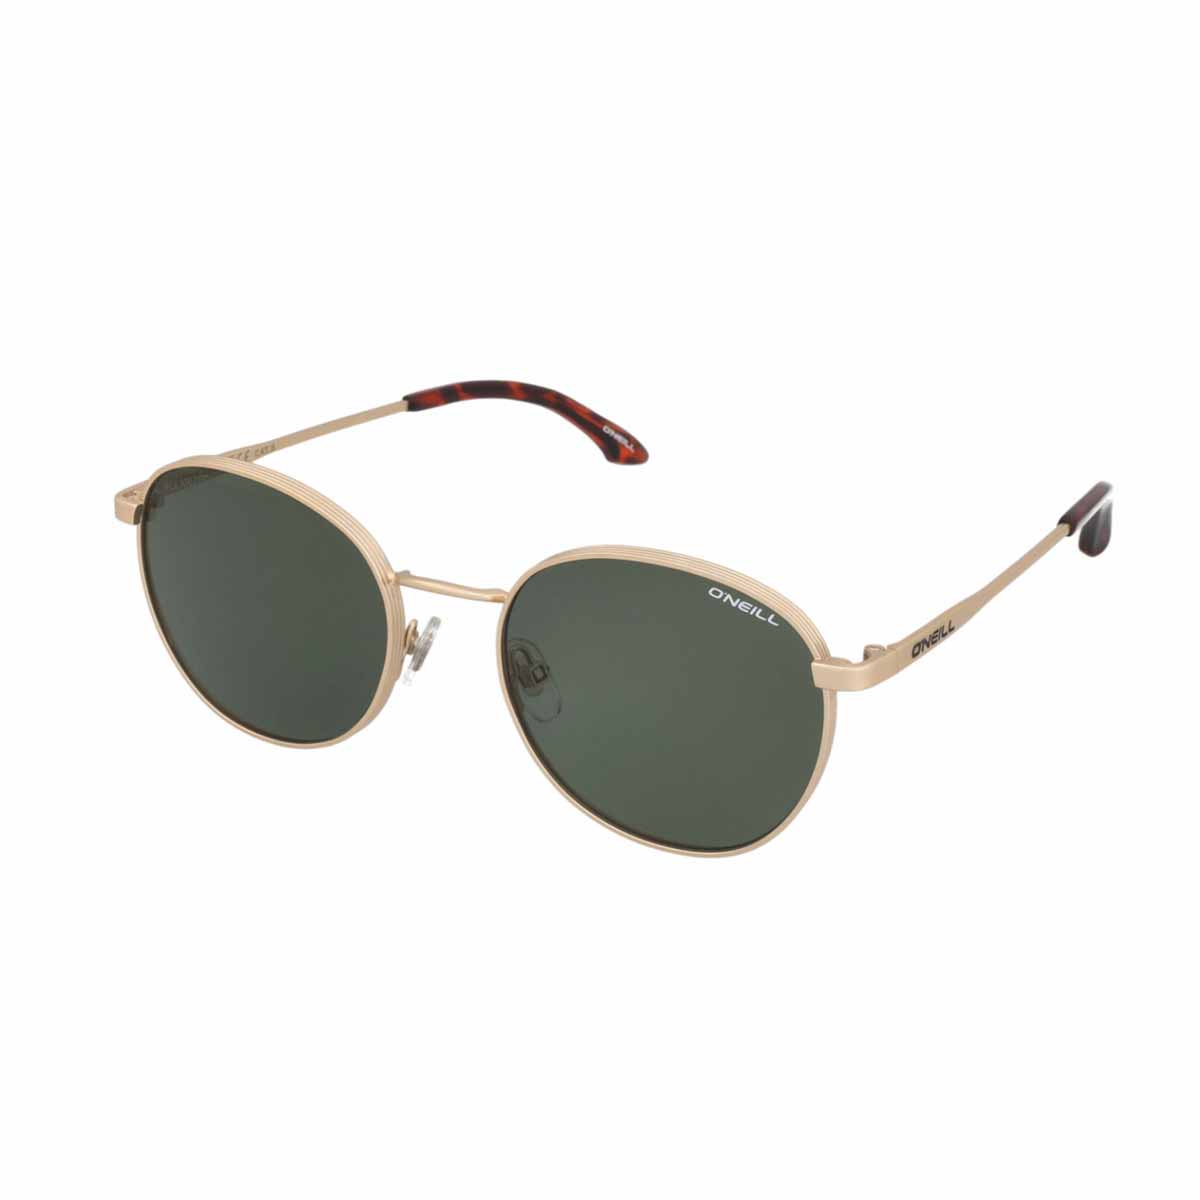 O'Neill 9013 2.0 Sunglasses – 101P Satin Gold